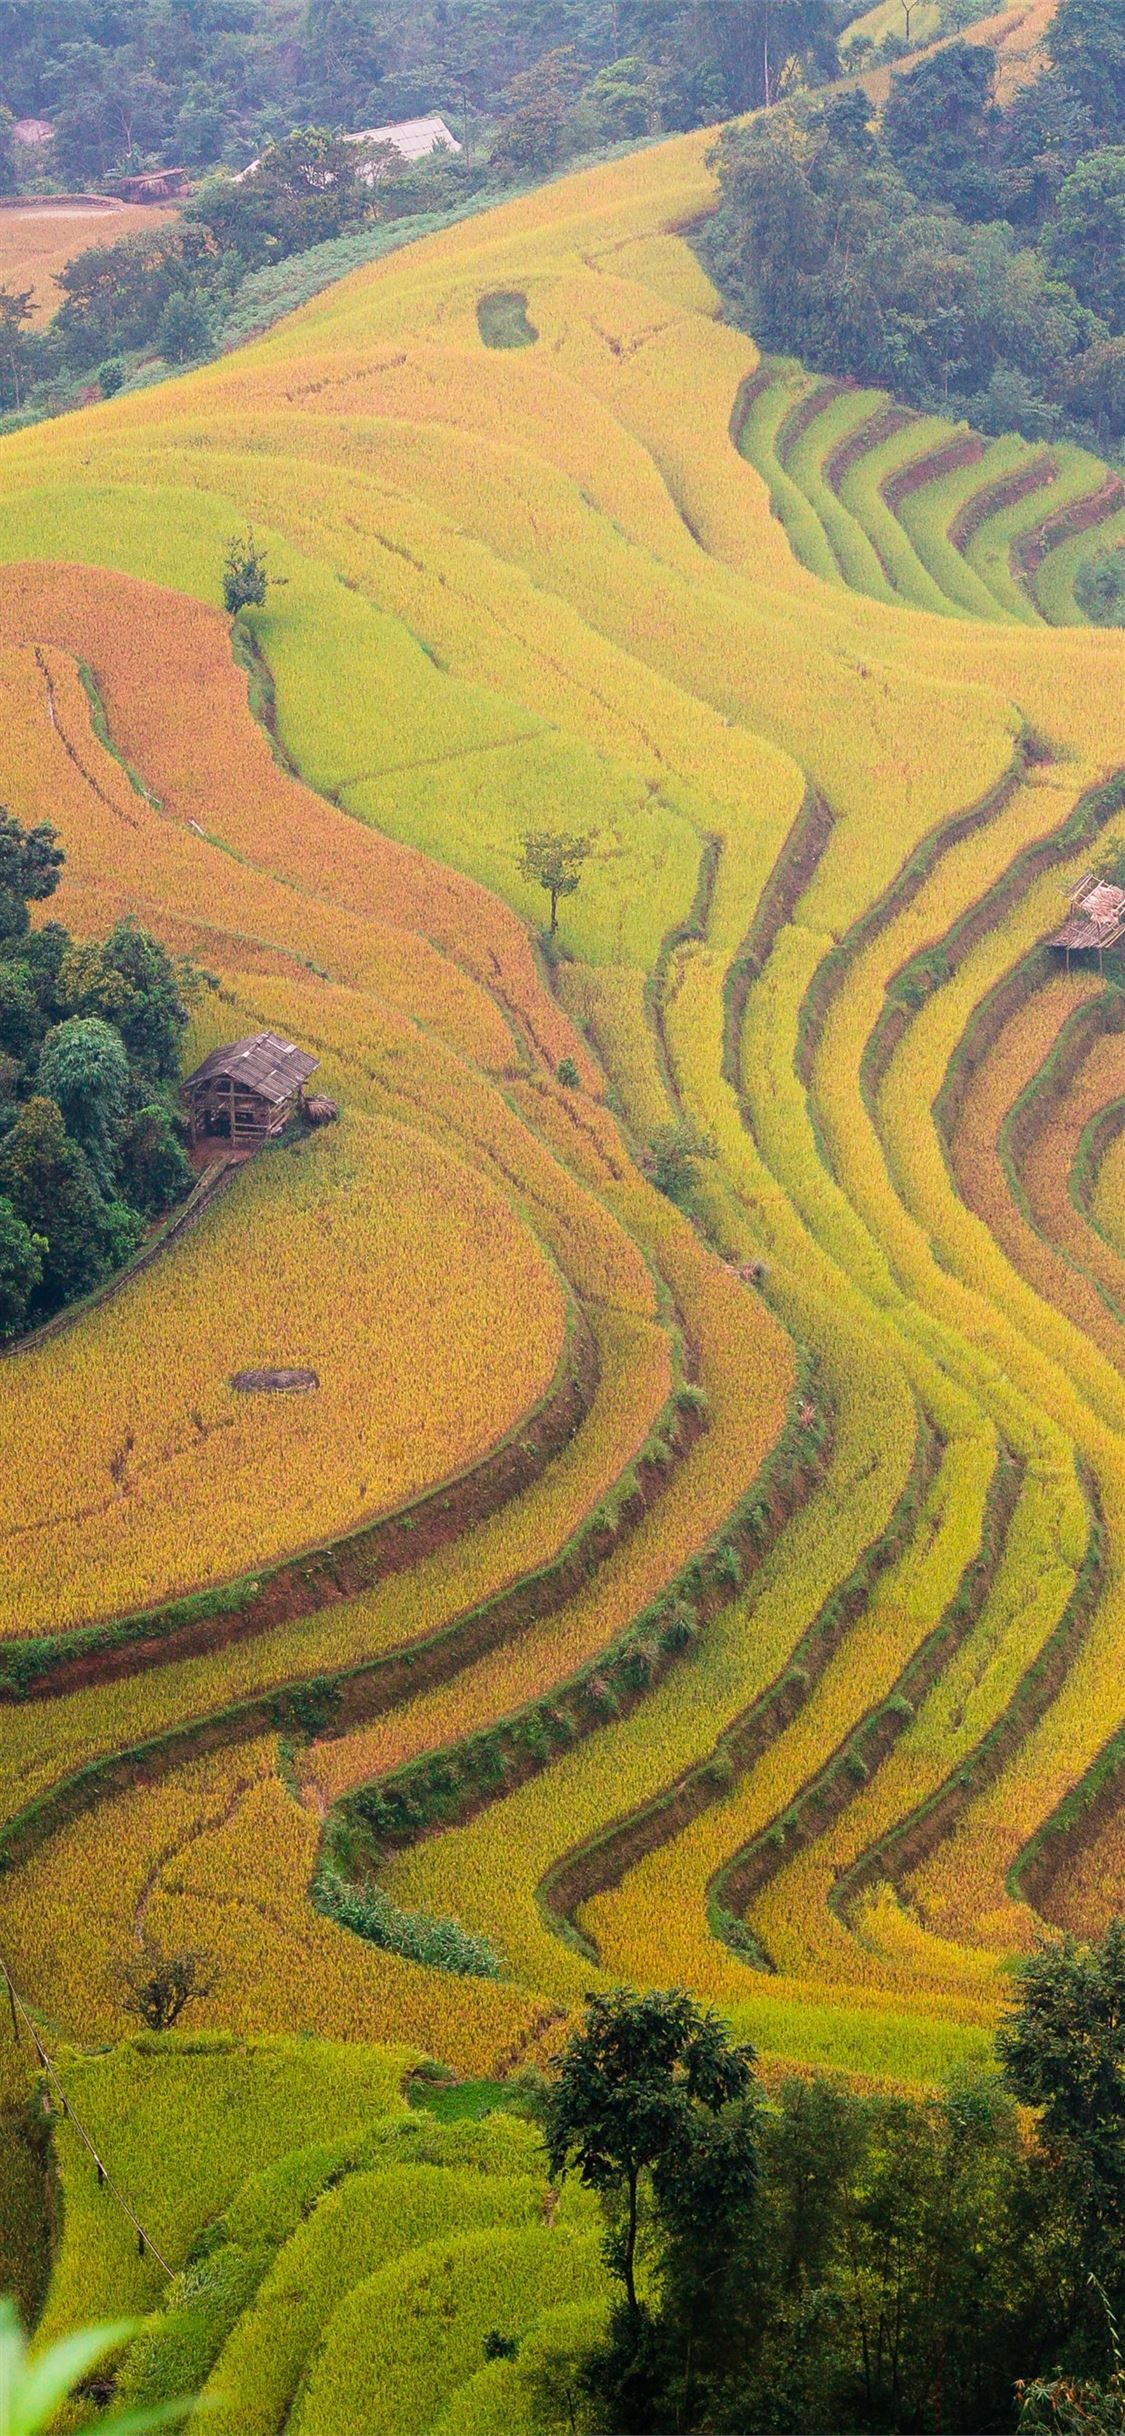 Rice Terraces of Vietnam iPhone Wallpaper Free Download